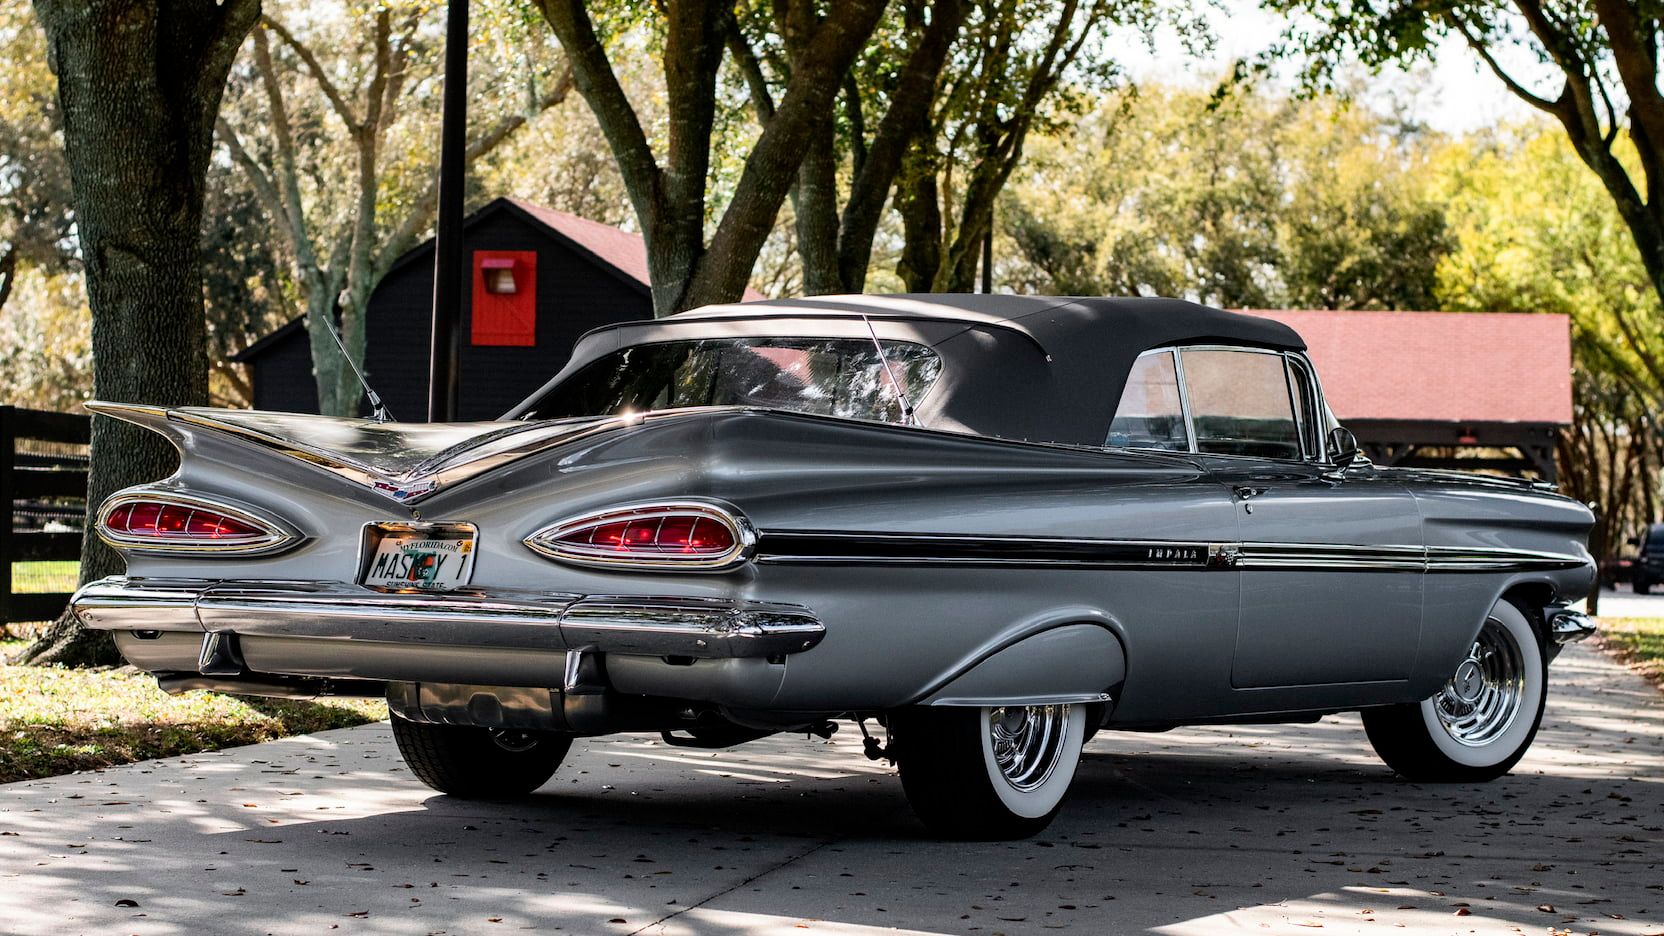 1959 Impala, rear view